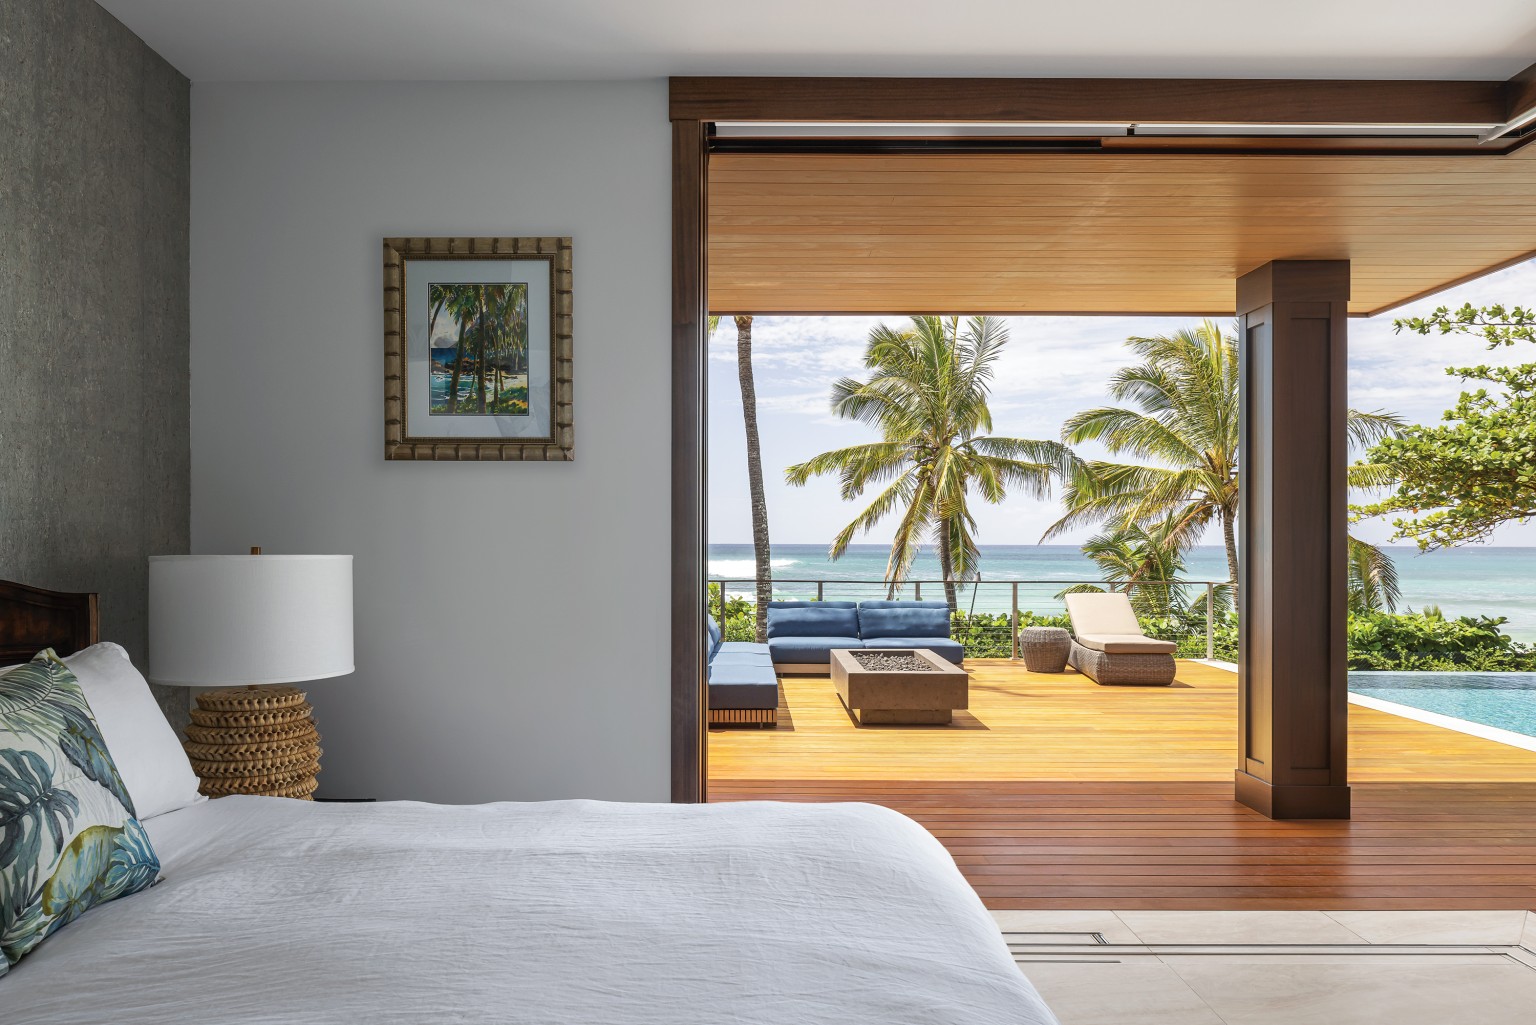 J. Martin Builders Crafts a Modern Tropical Oasis - Hawaii Home ...